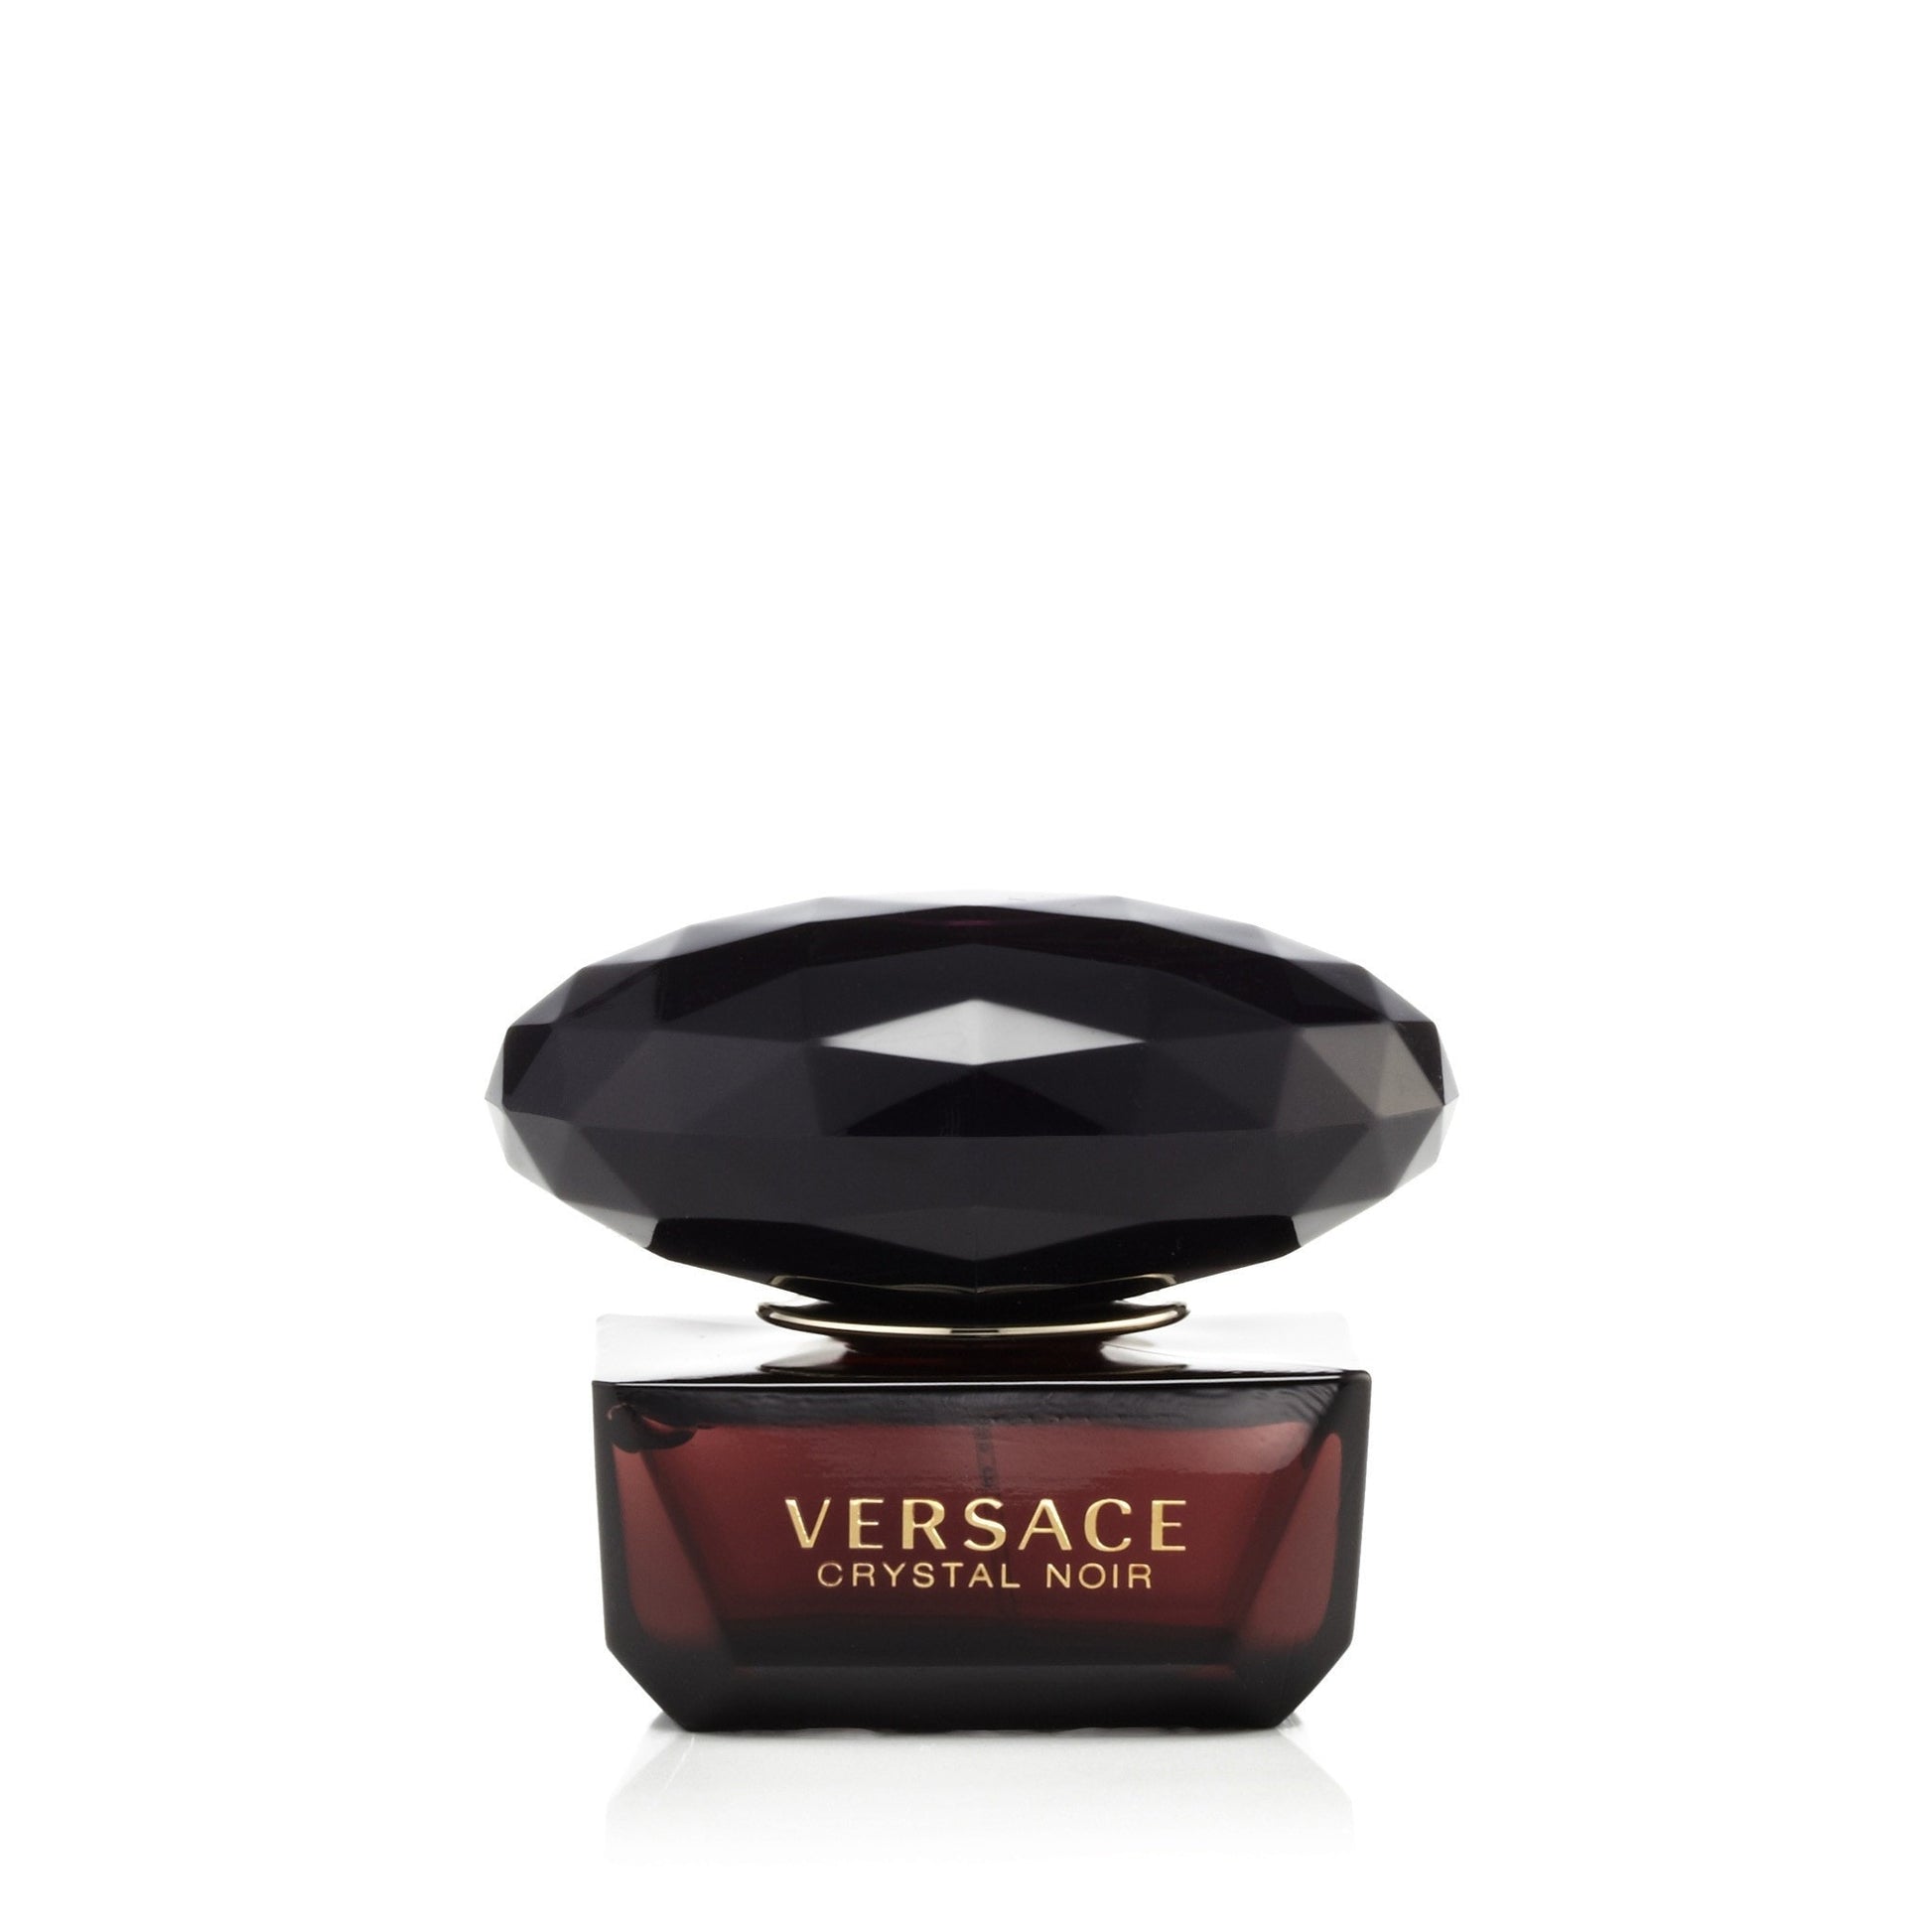 Versace Crystal Noir Eau de Toilette Womens Spray 1.7 oz.  Click to open in modal